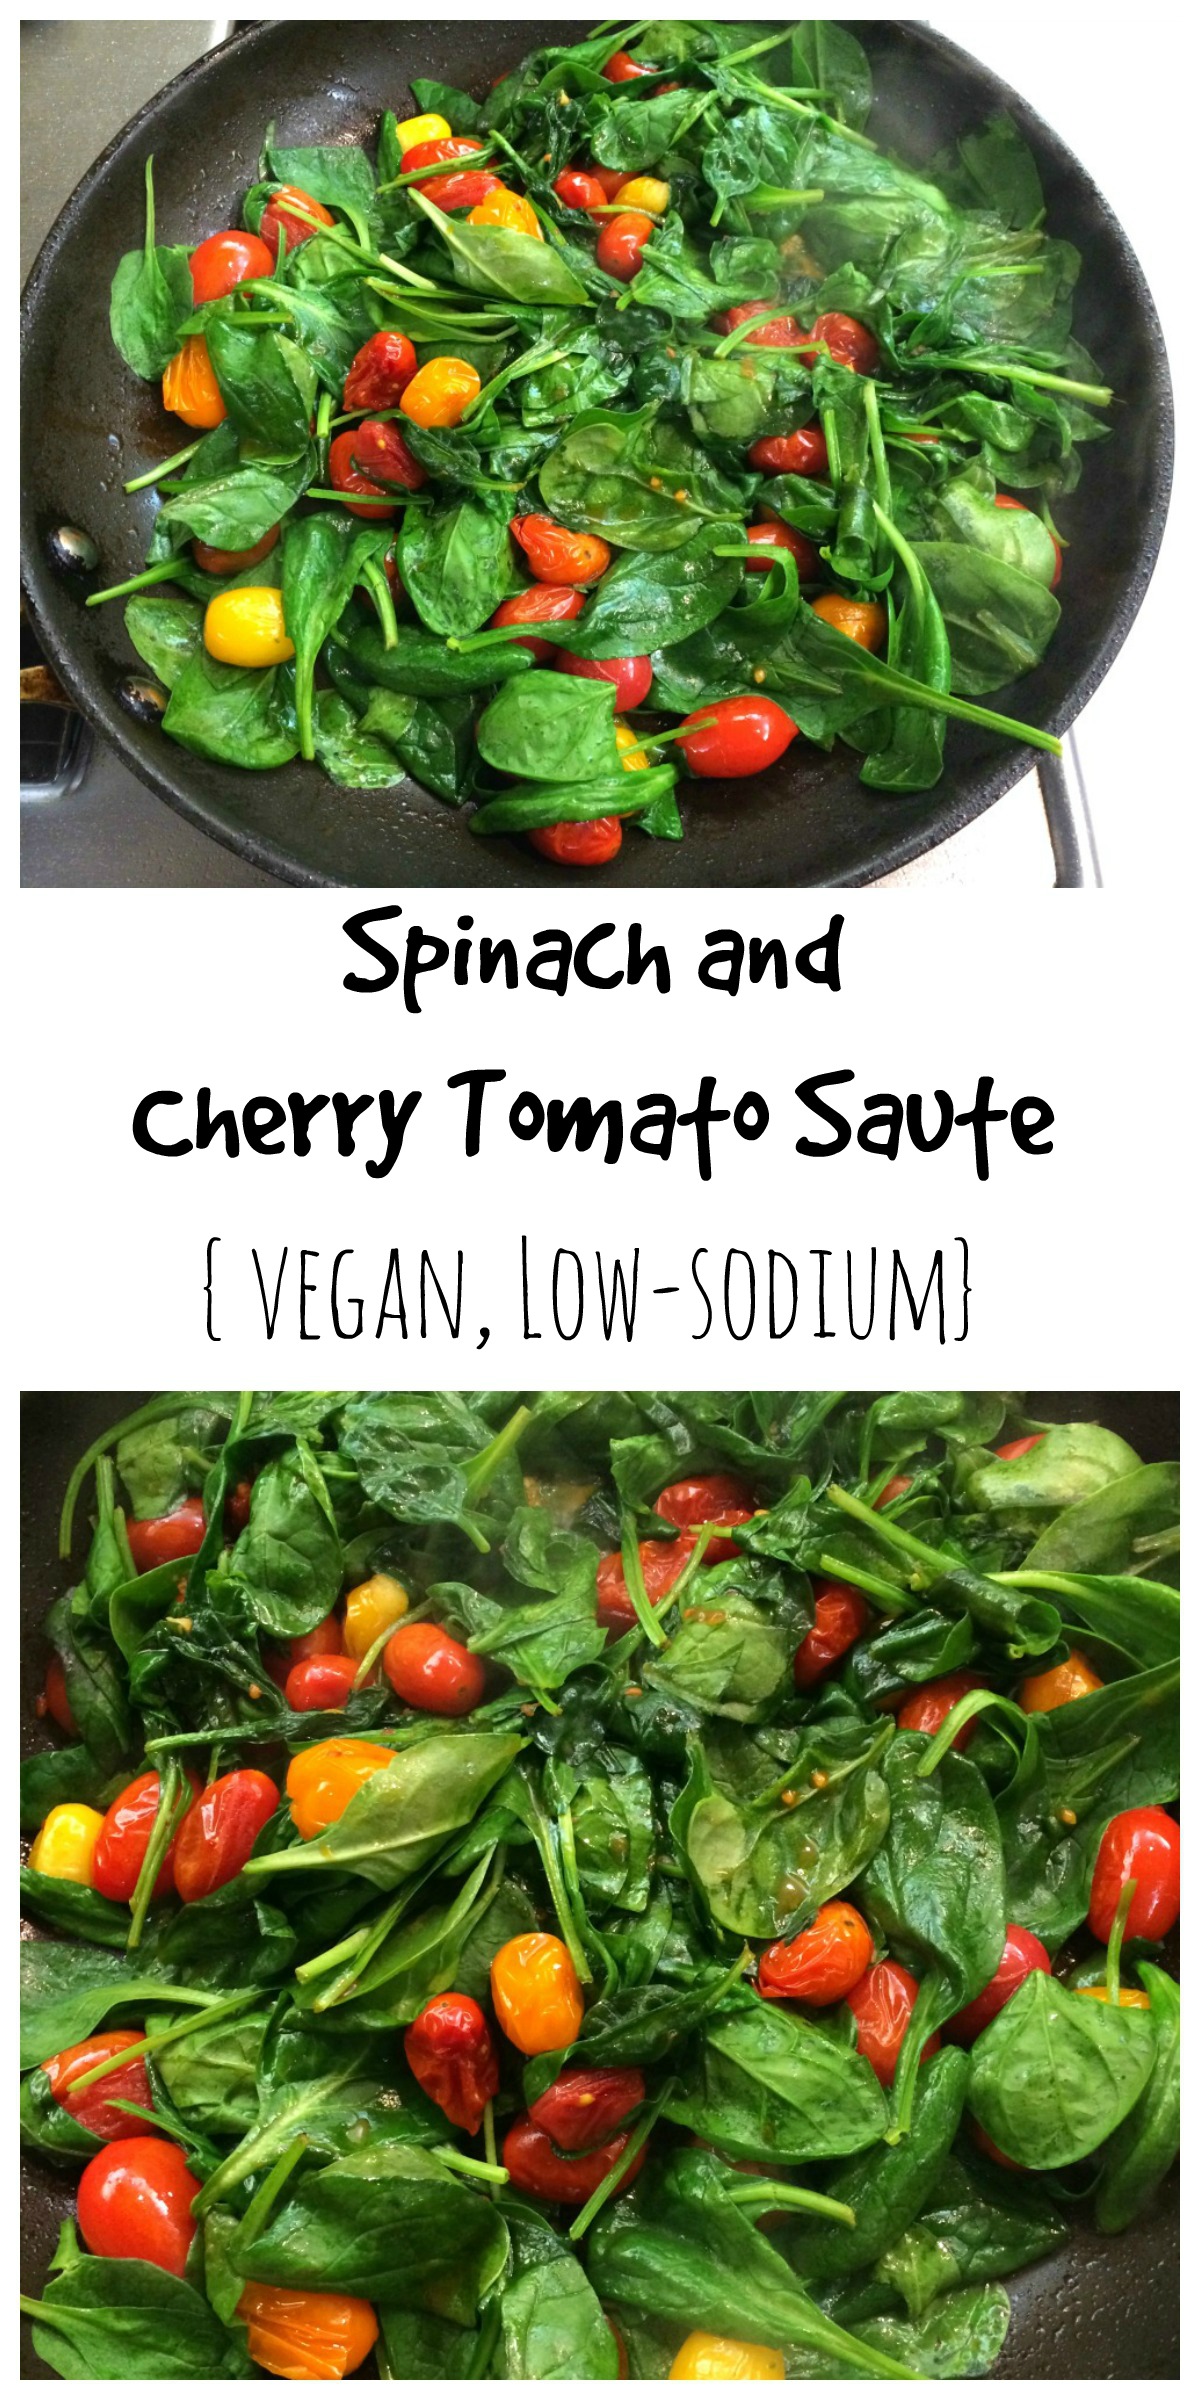 Spinach and Cherry Tomato Saute recipe vegan on ShockinglyDelicious.com